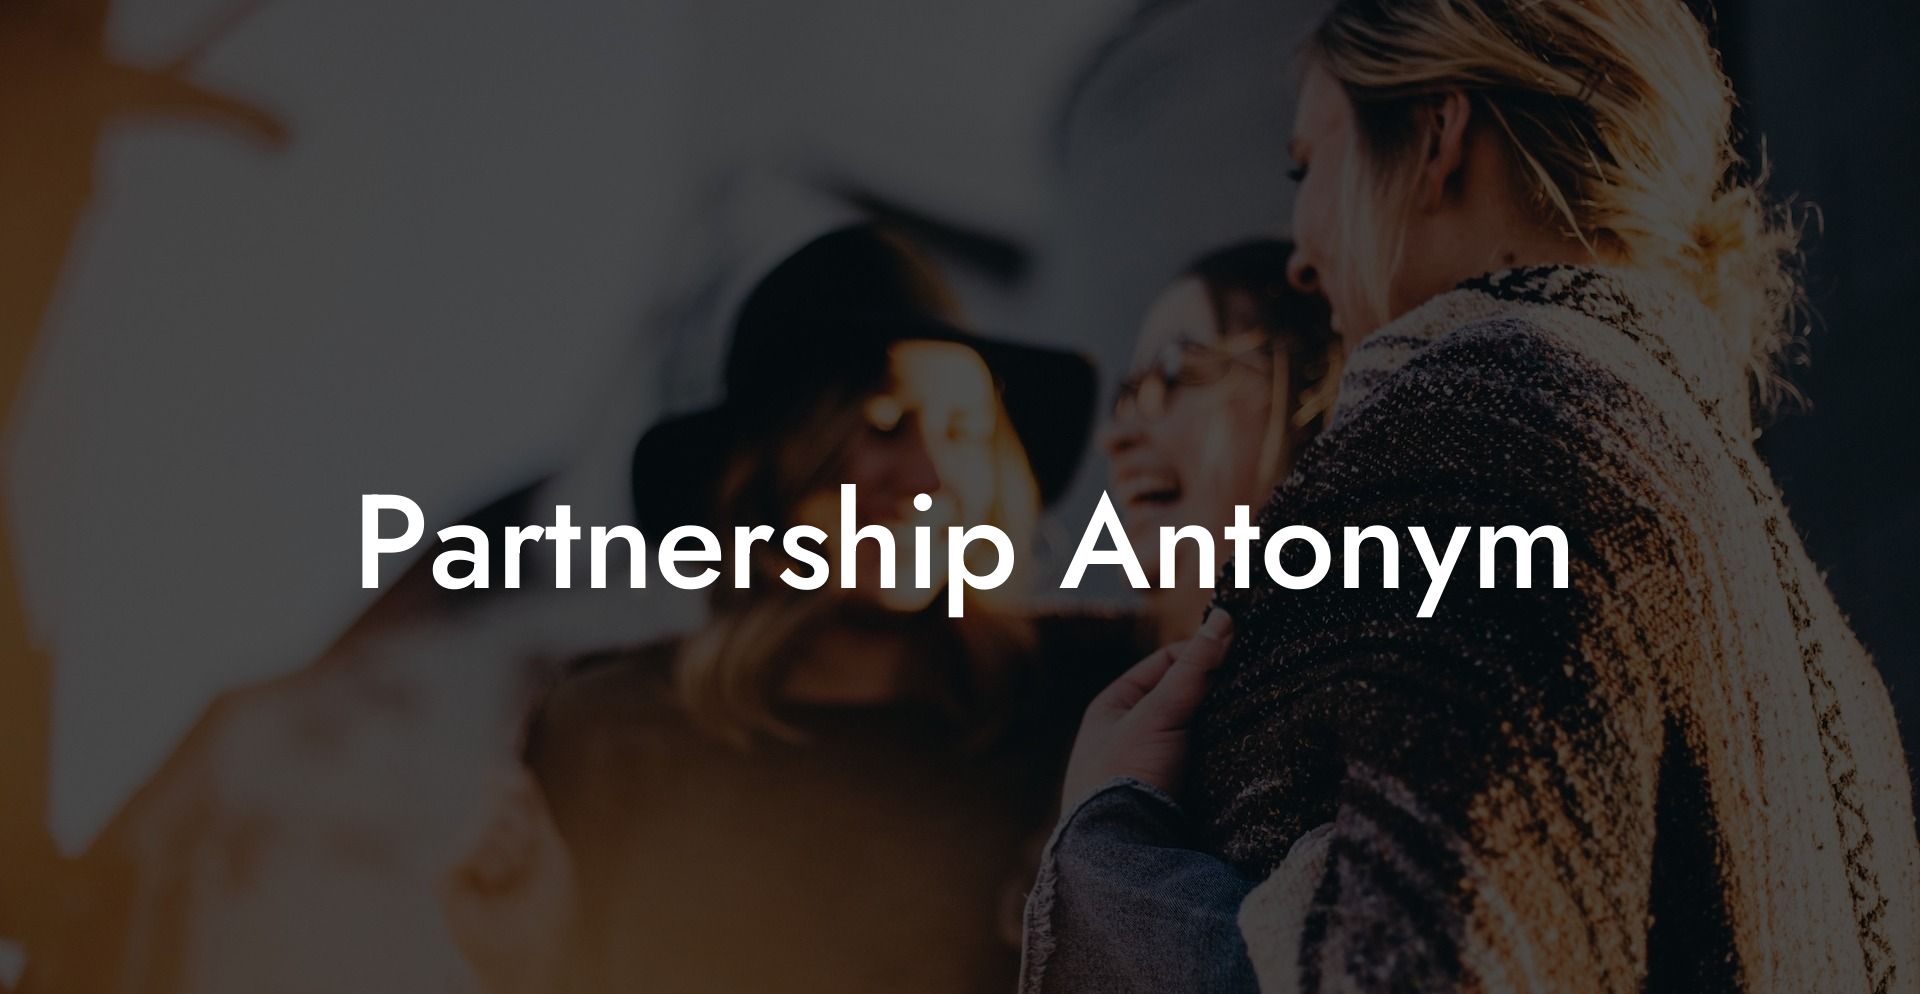 Partnership Antonym